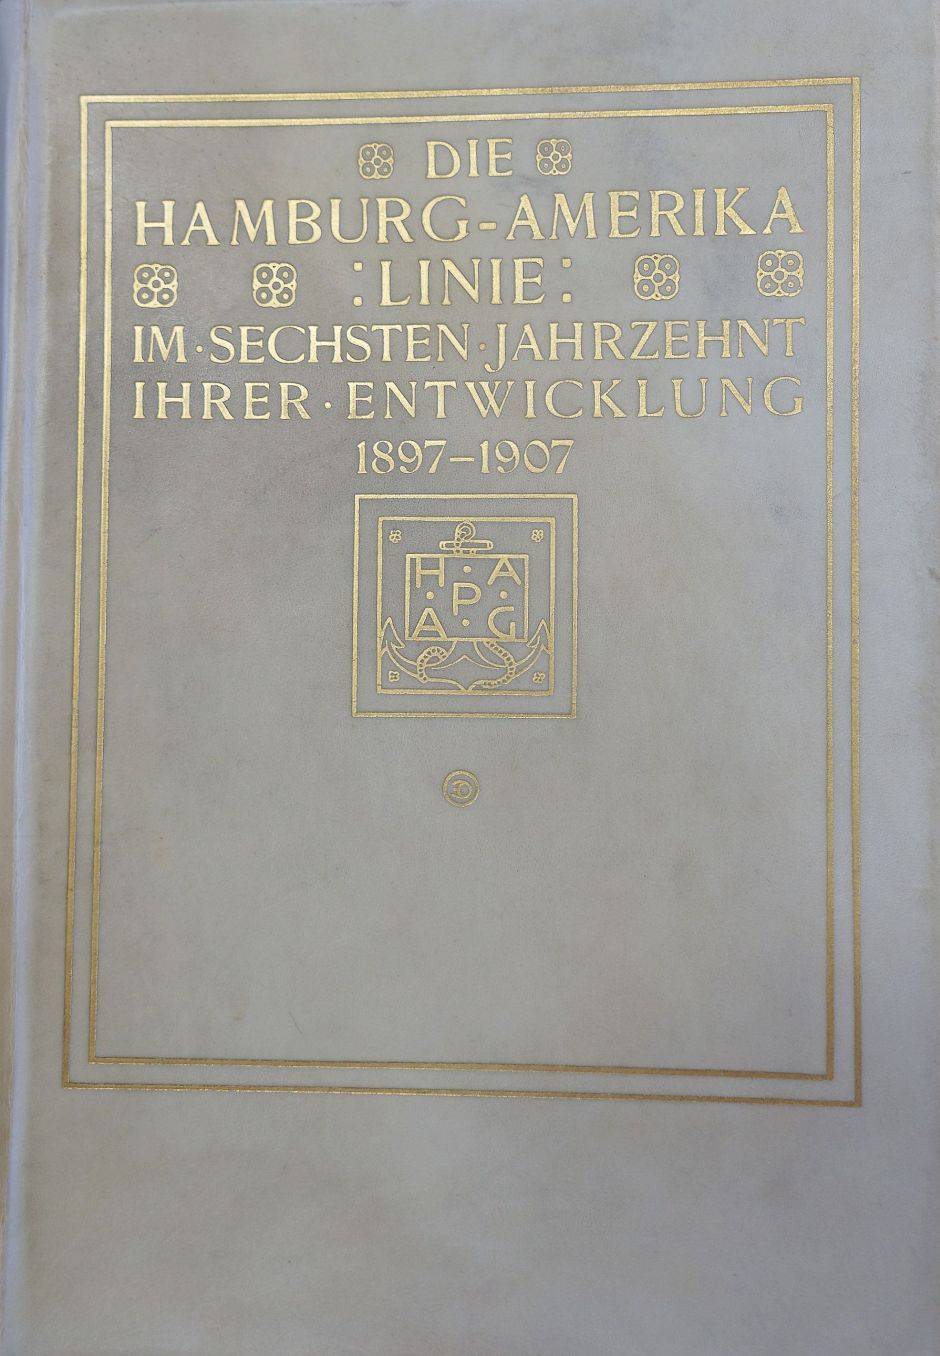 Lot 3329, Auction  115, Hamburg-Amerika-Linie und Orlik, Emil, Hamburg-Amerika-Linie 